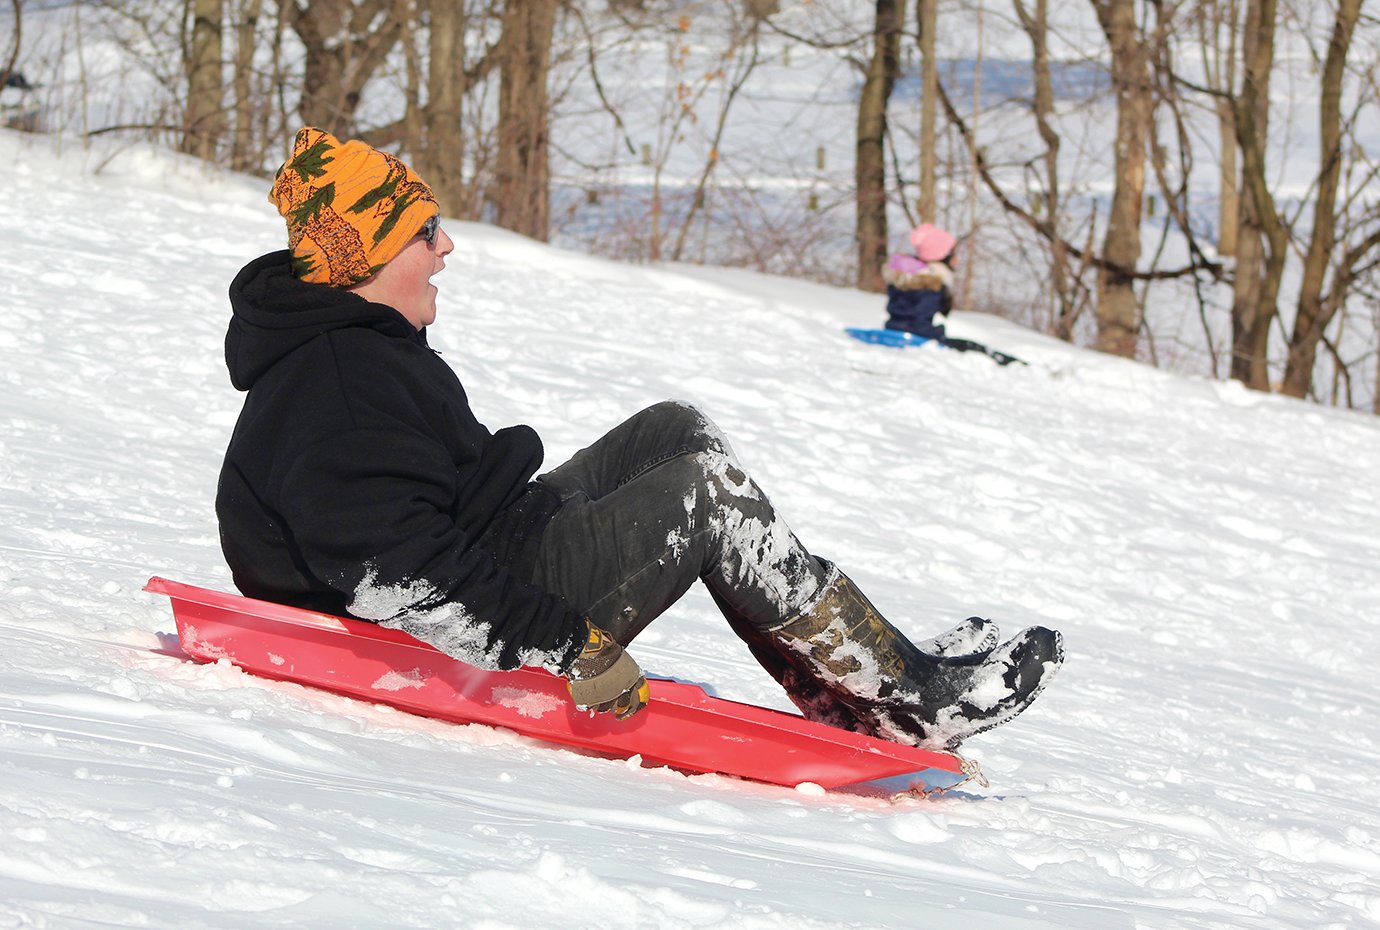 Joseph Melton, 15, sleds the slick slopes of Milligan Park on Friday.